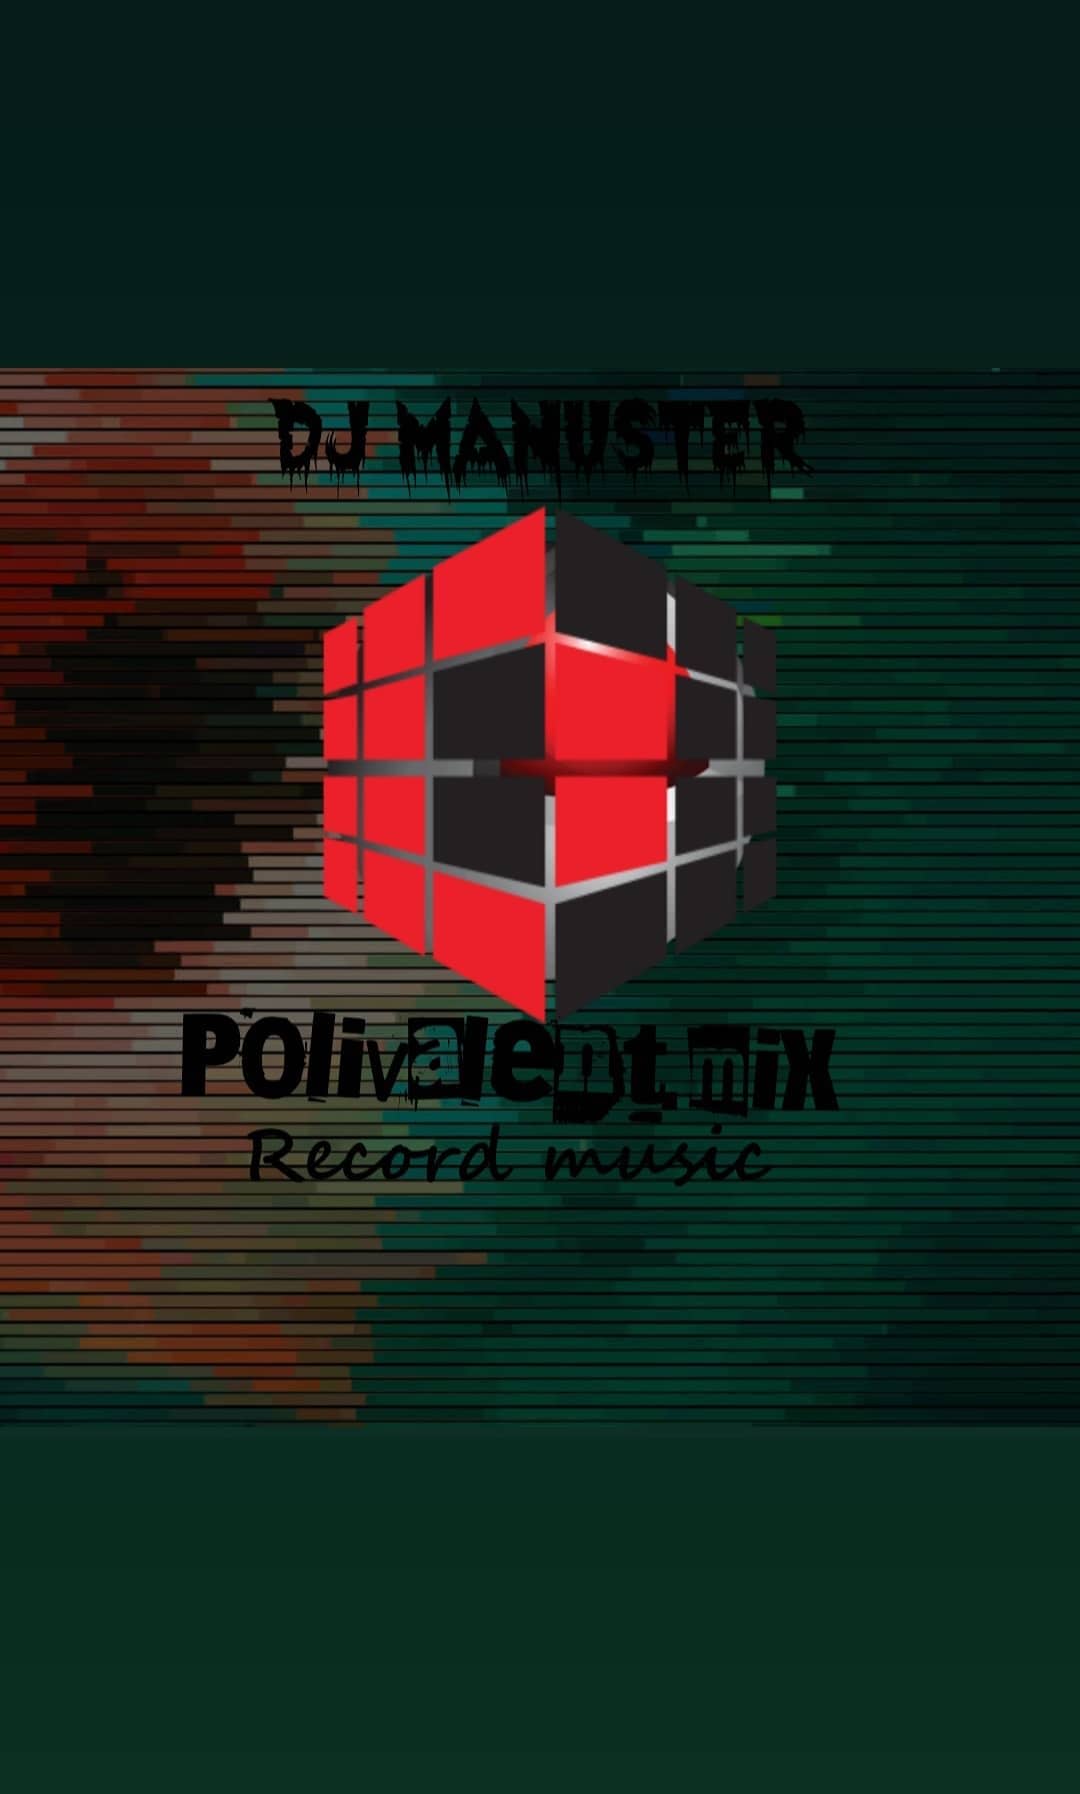 DJ Manuster